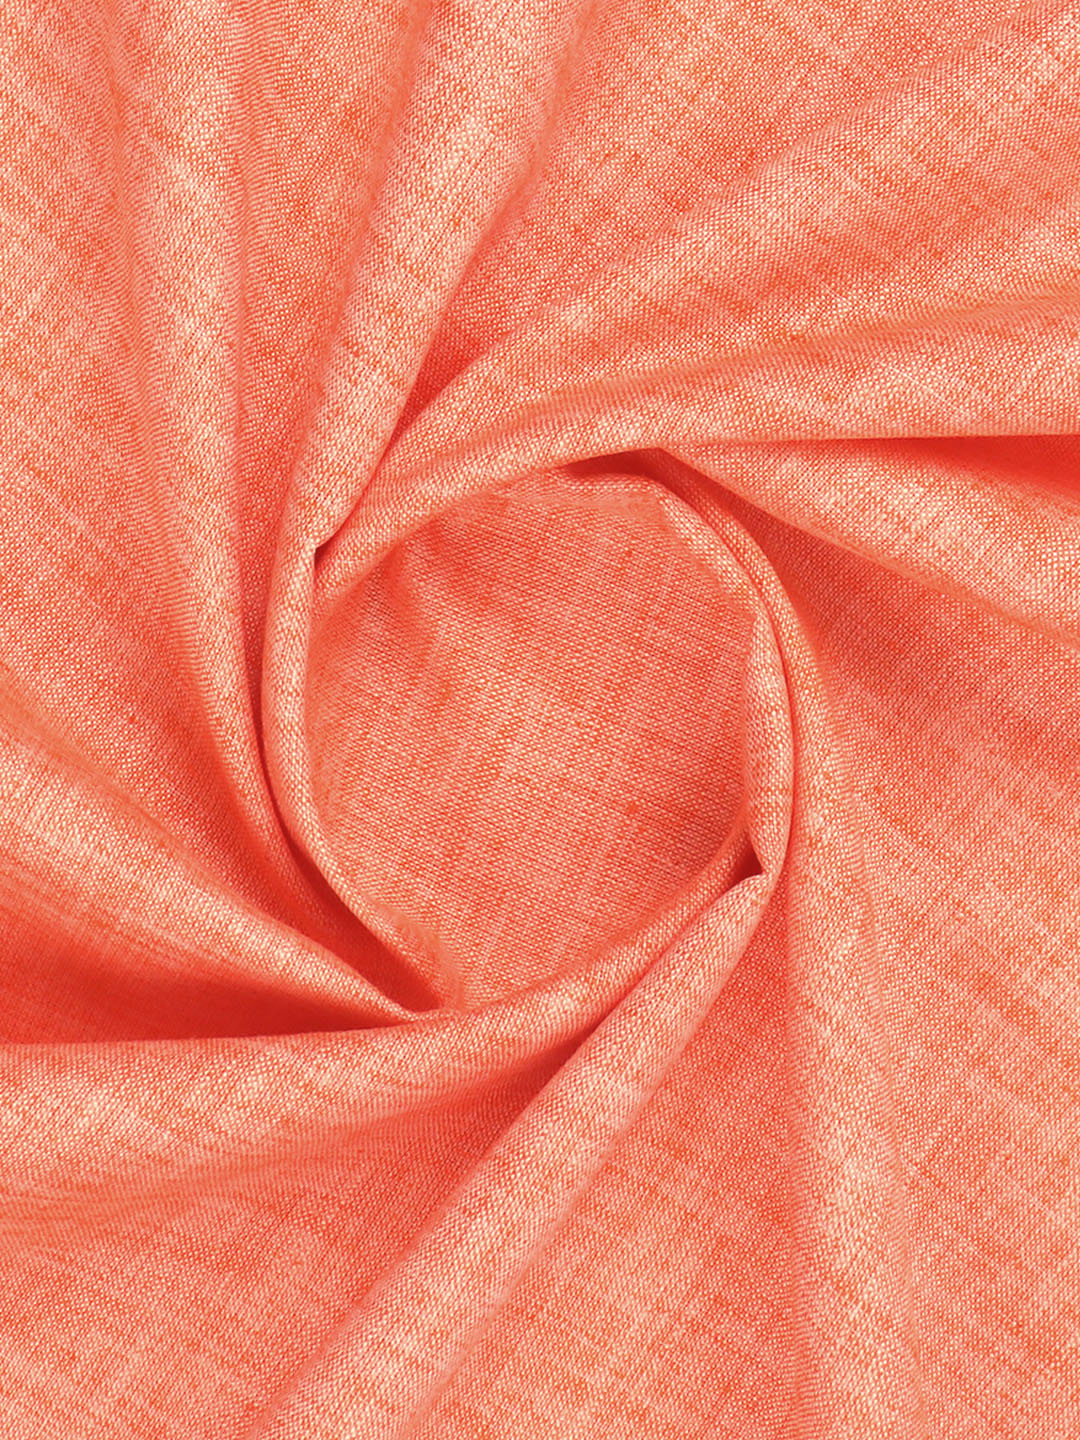 Cotton Blend Lite Orange Colour Kurtha Fabric Lampus - APC1106-10